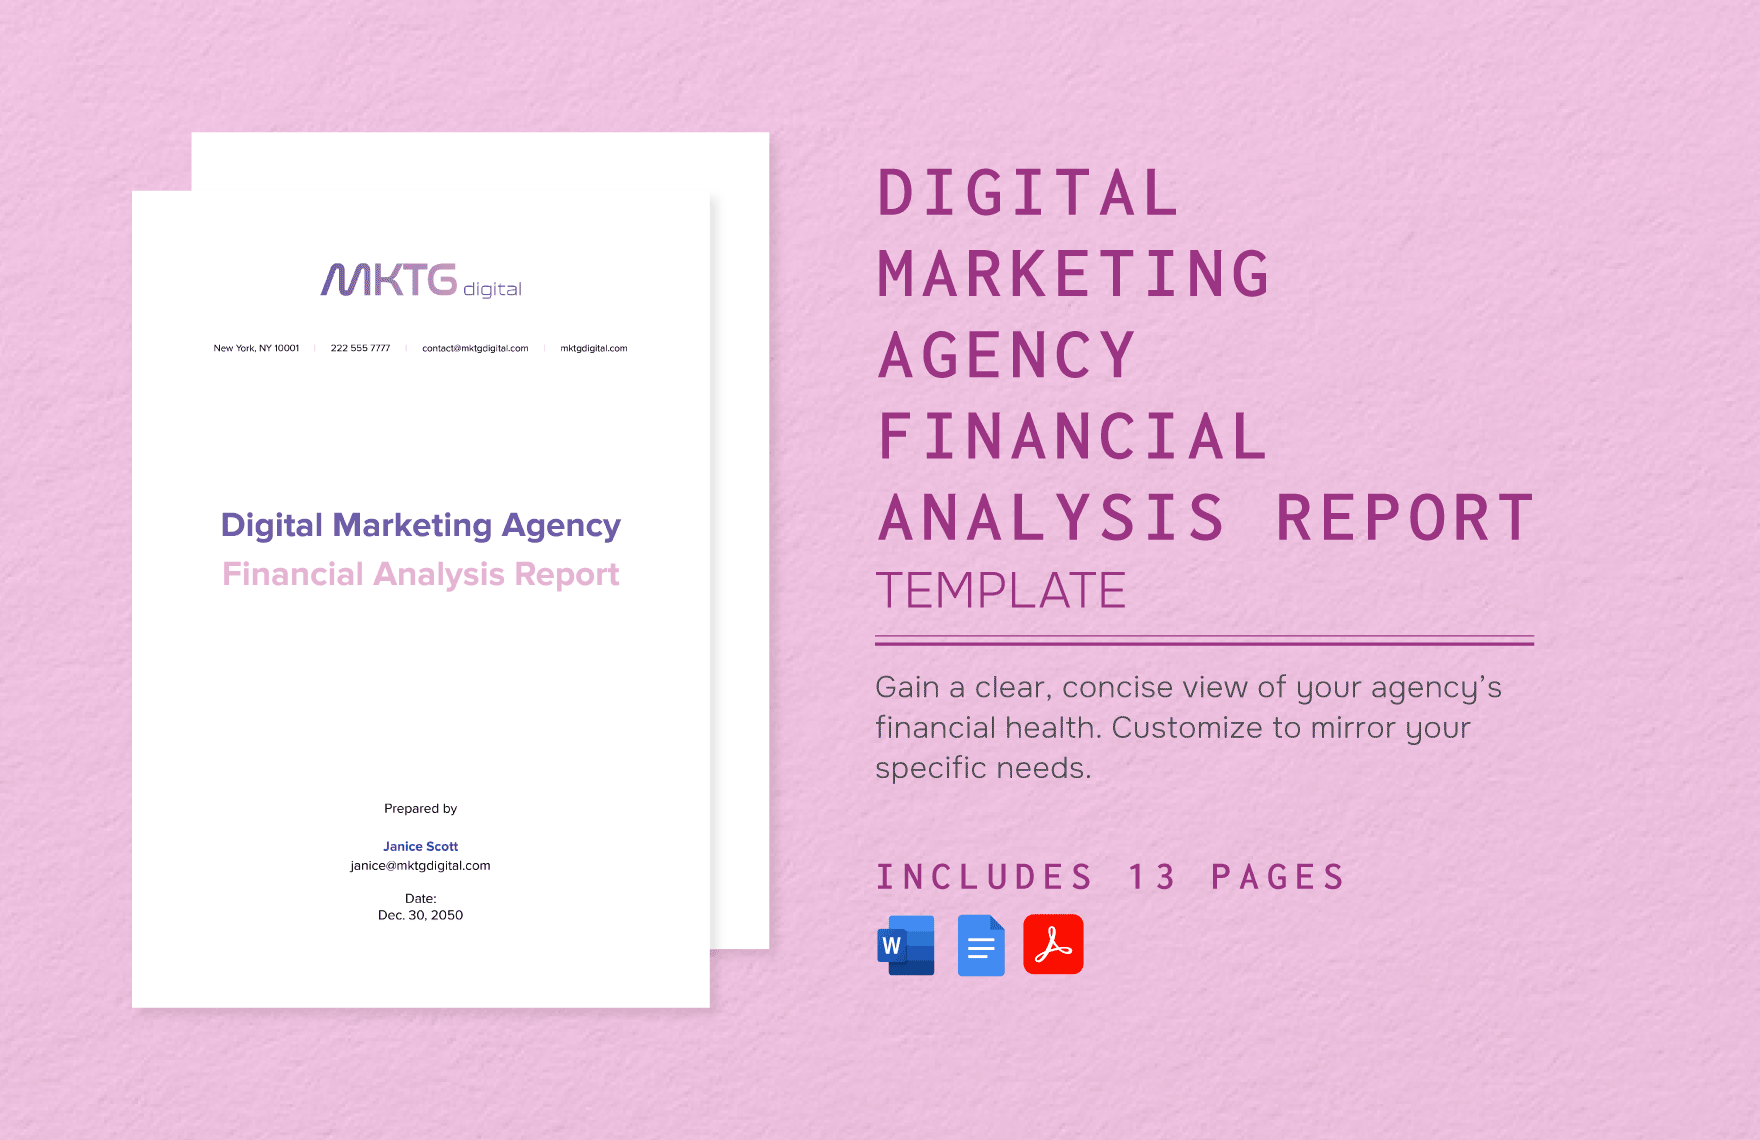 Digital Marketing Agency Financial Analysis Report Template